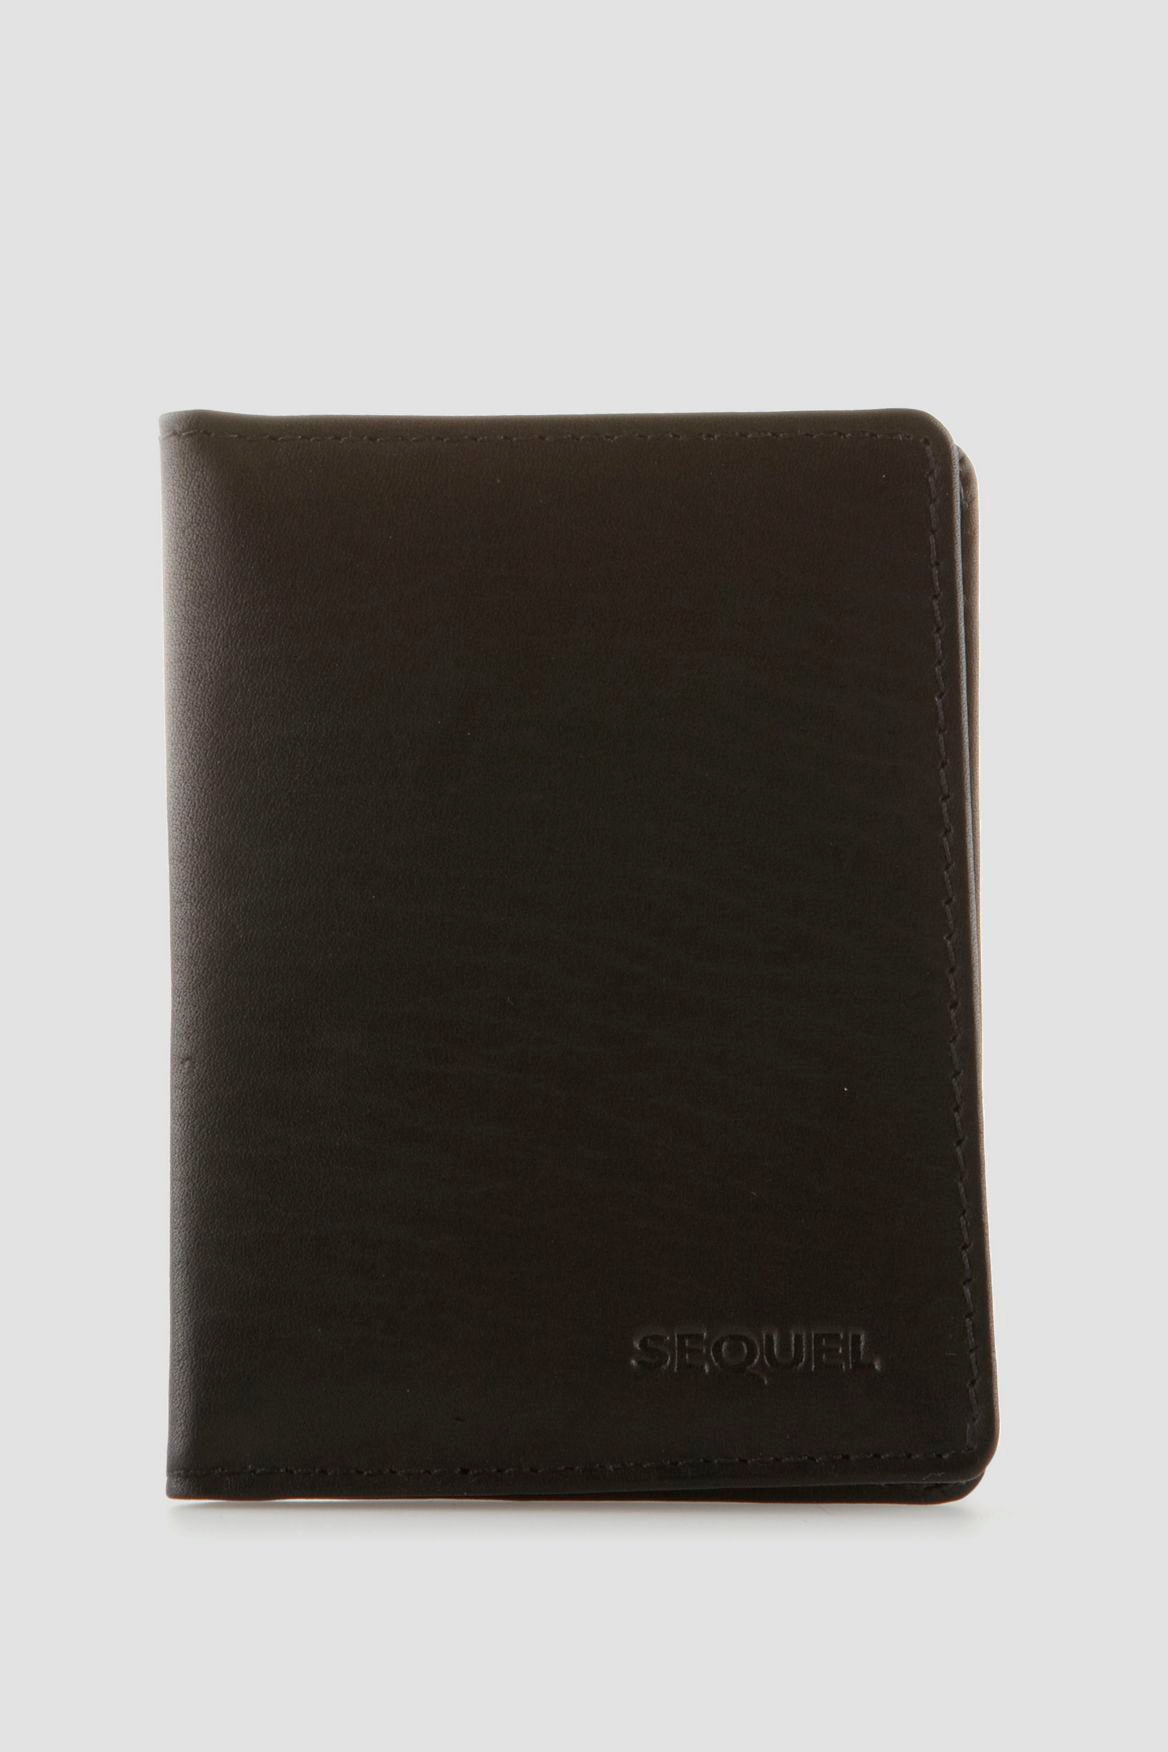 Sequel Leather Credit Card Case – Strandbags Australia